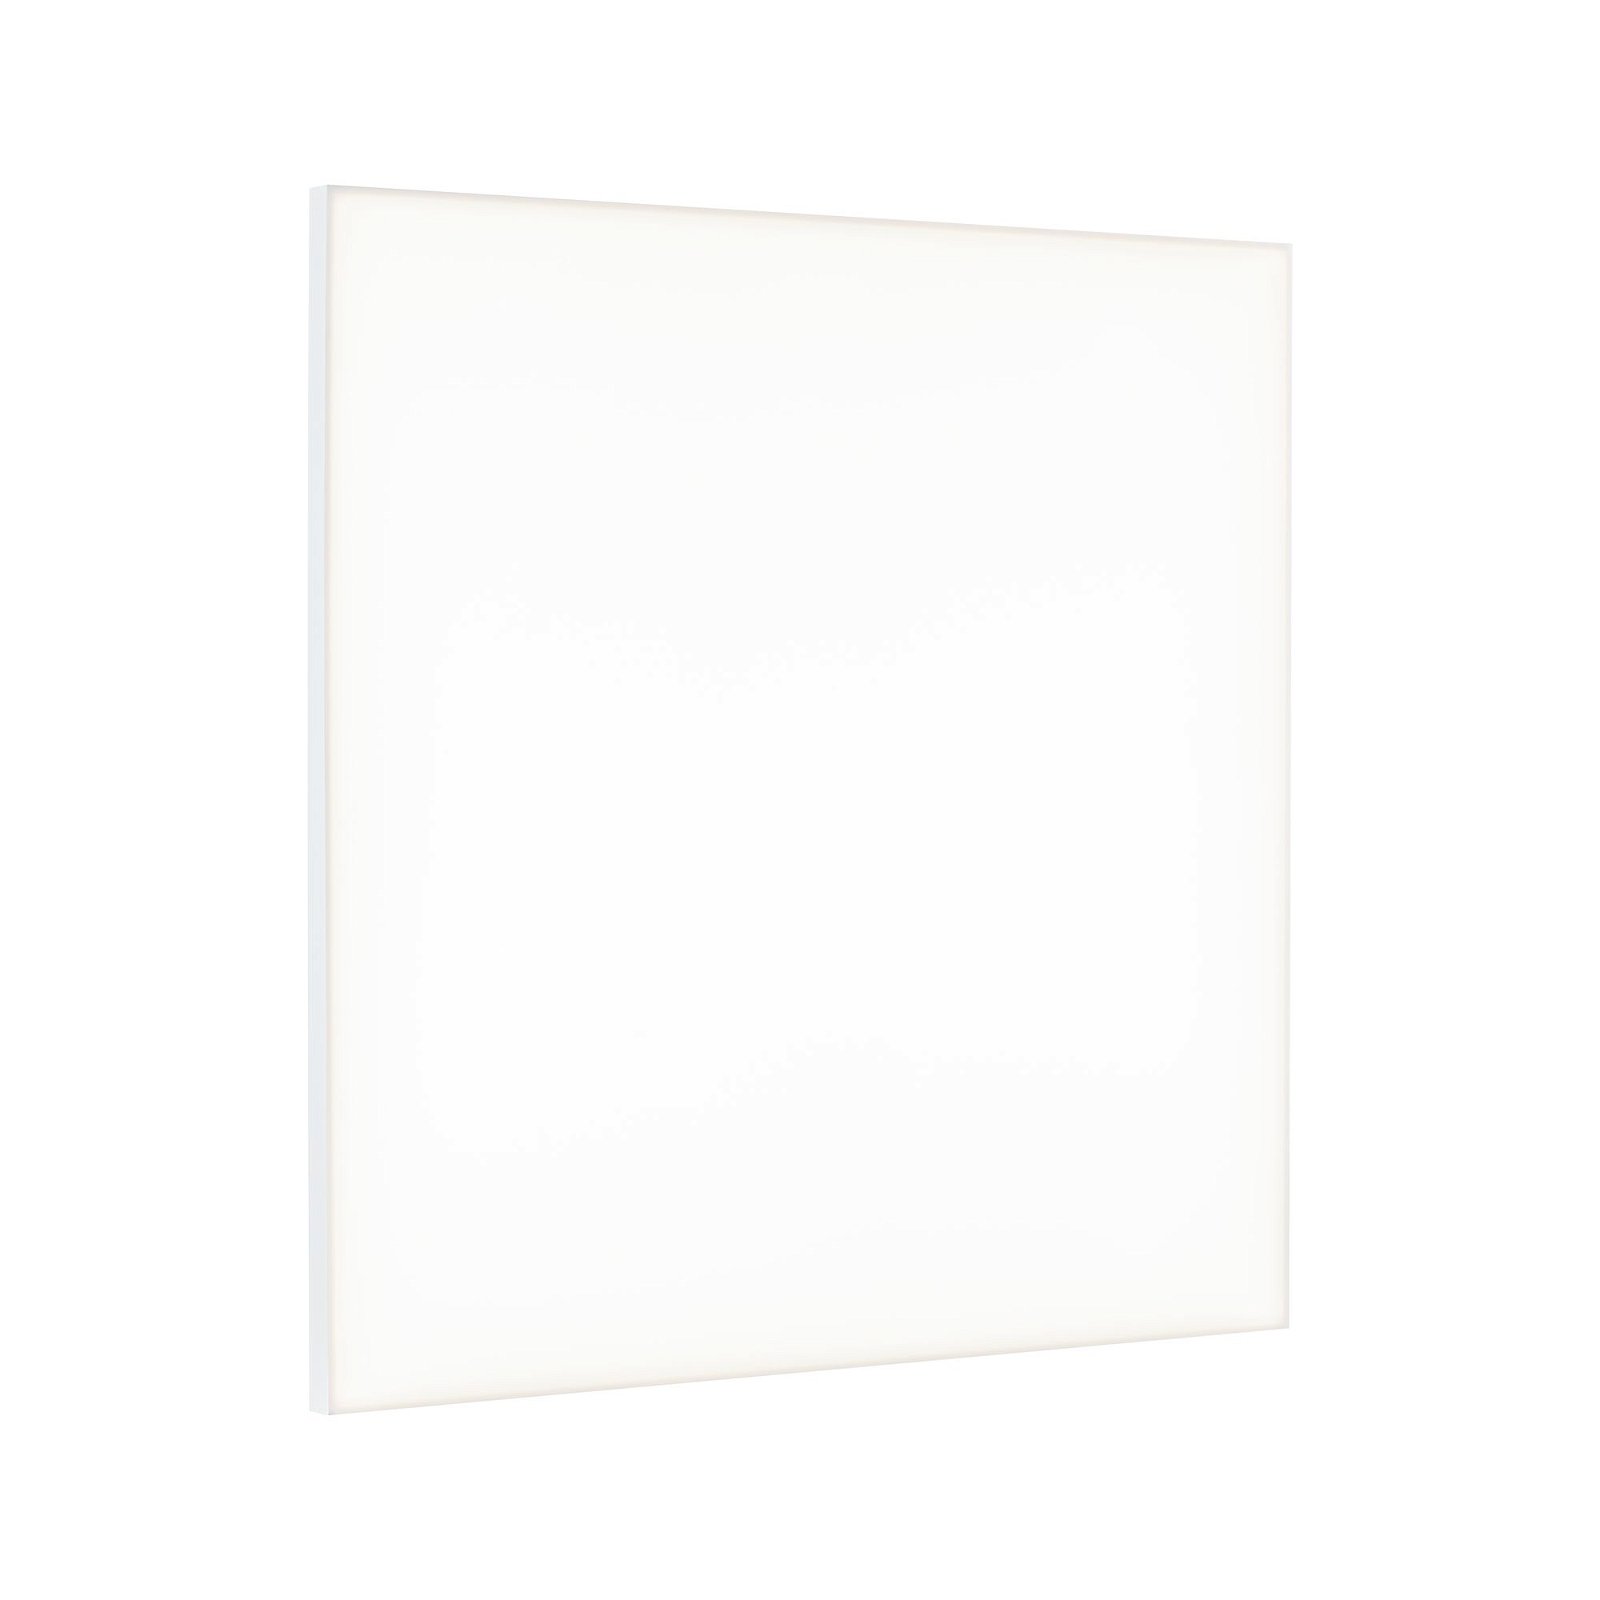 LED Panel 3-Step-Dim Velora square 595x595mm 34W 3500lm 3000K Matt white dimmable